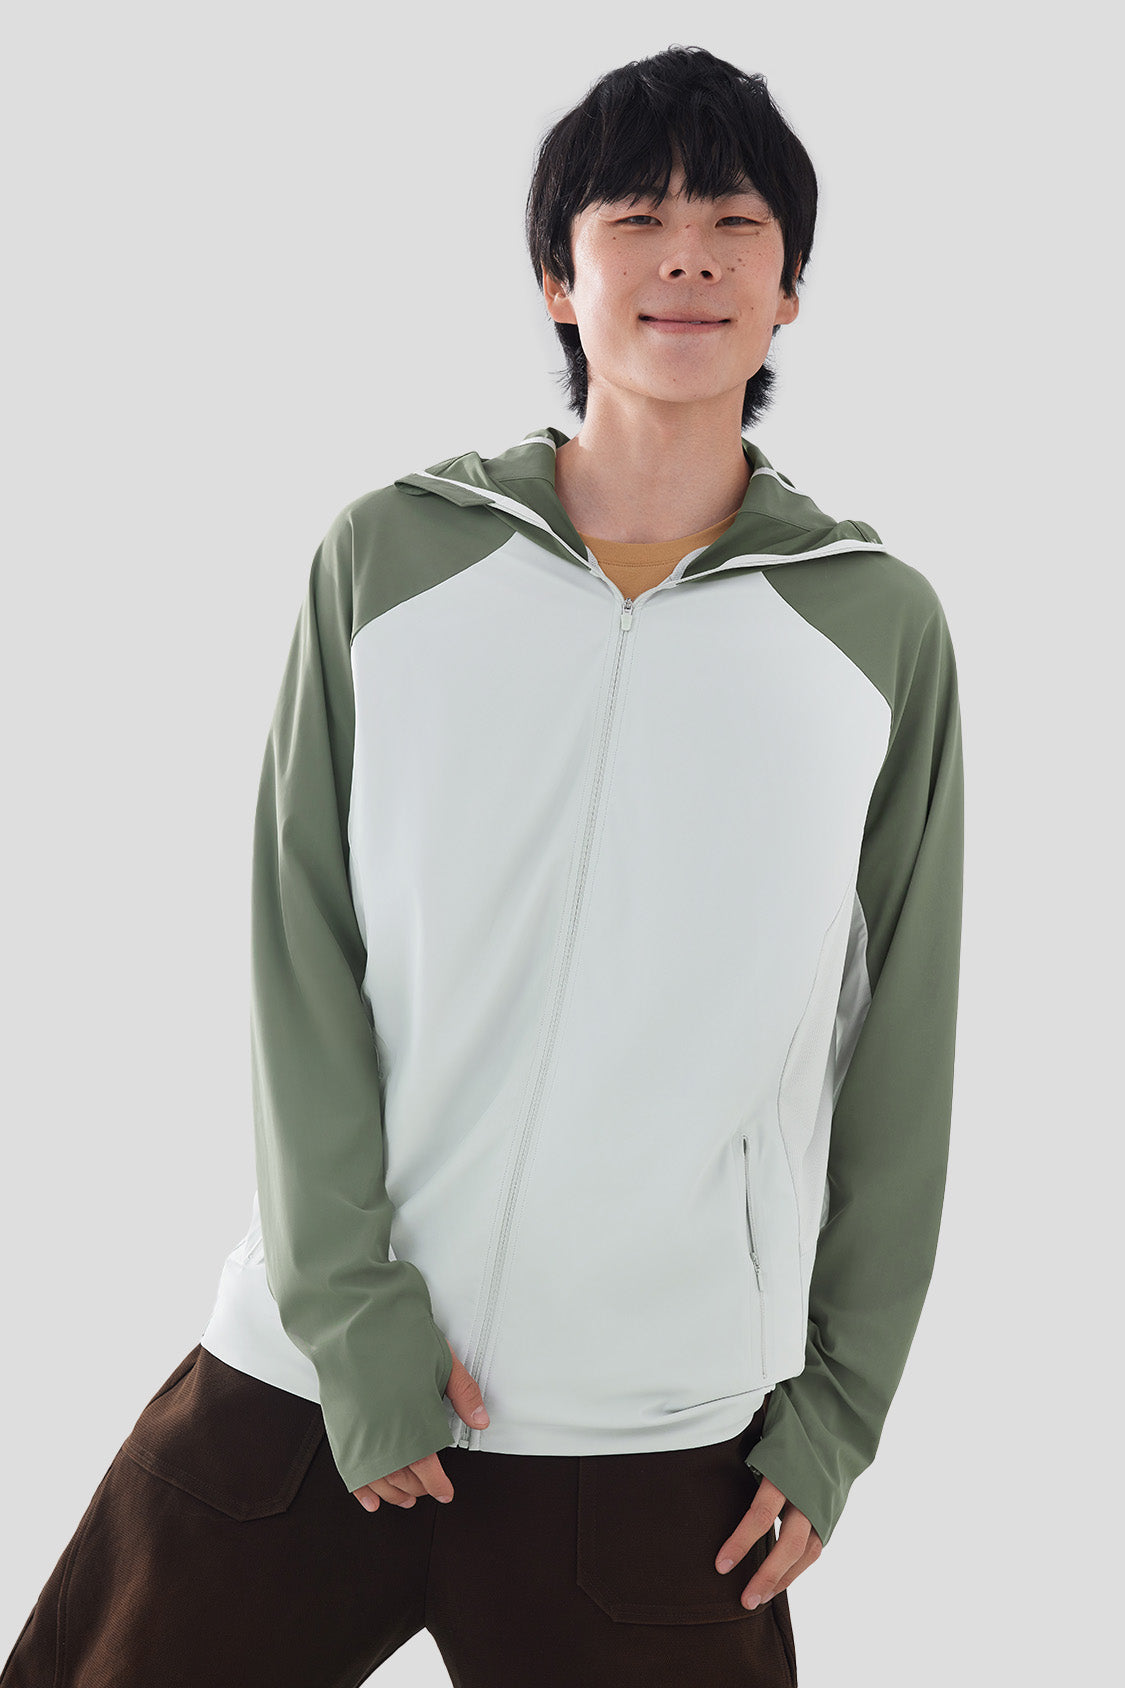 beneunder mens sun protection jacket upf50+ #color_galaxy gray - lake tea green